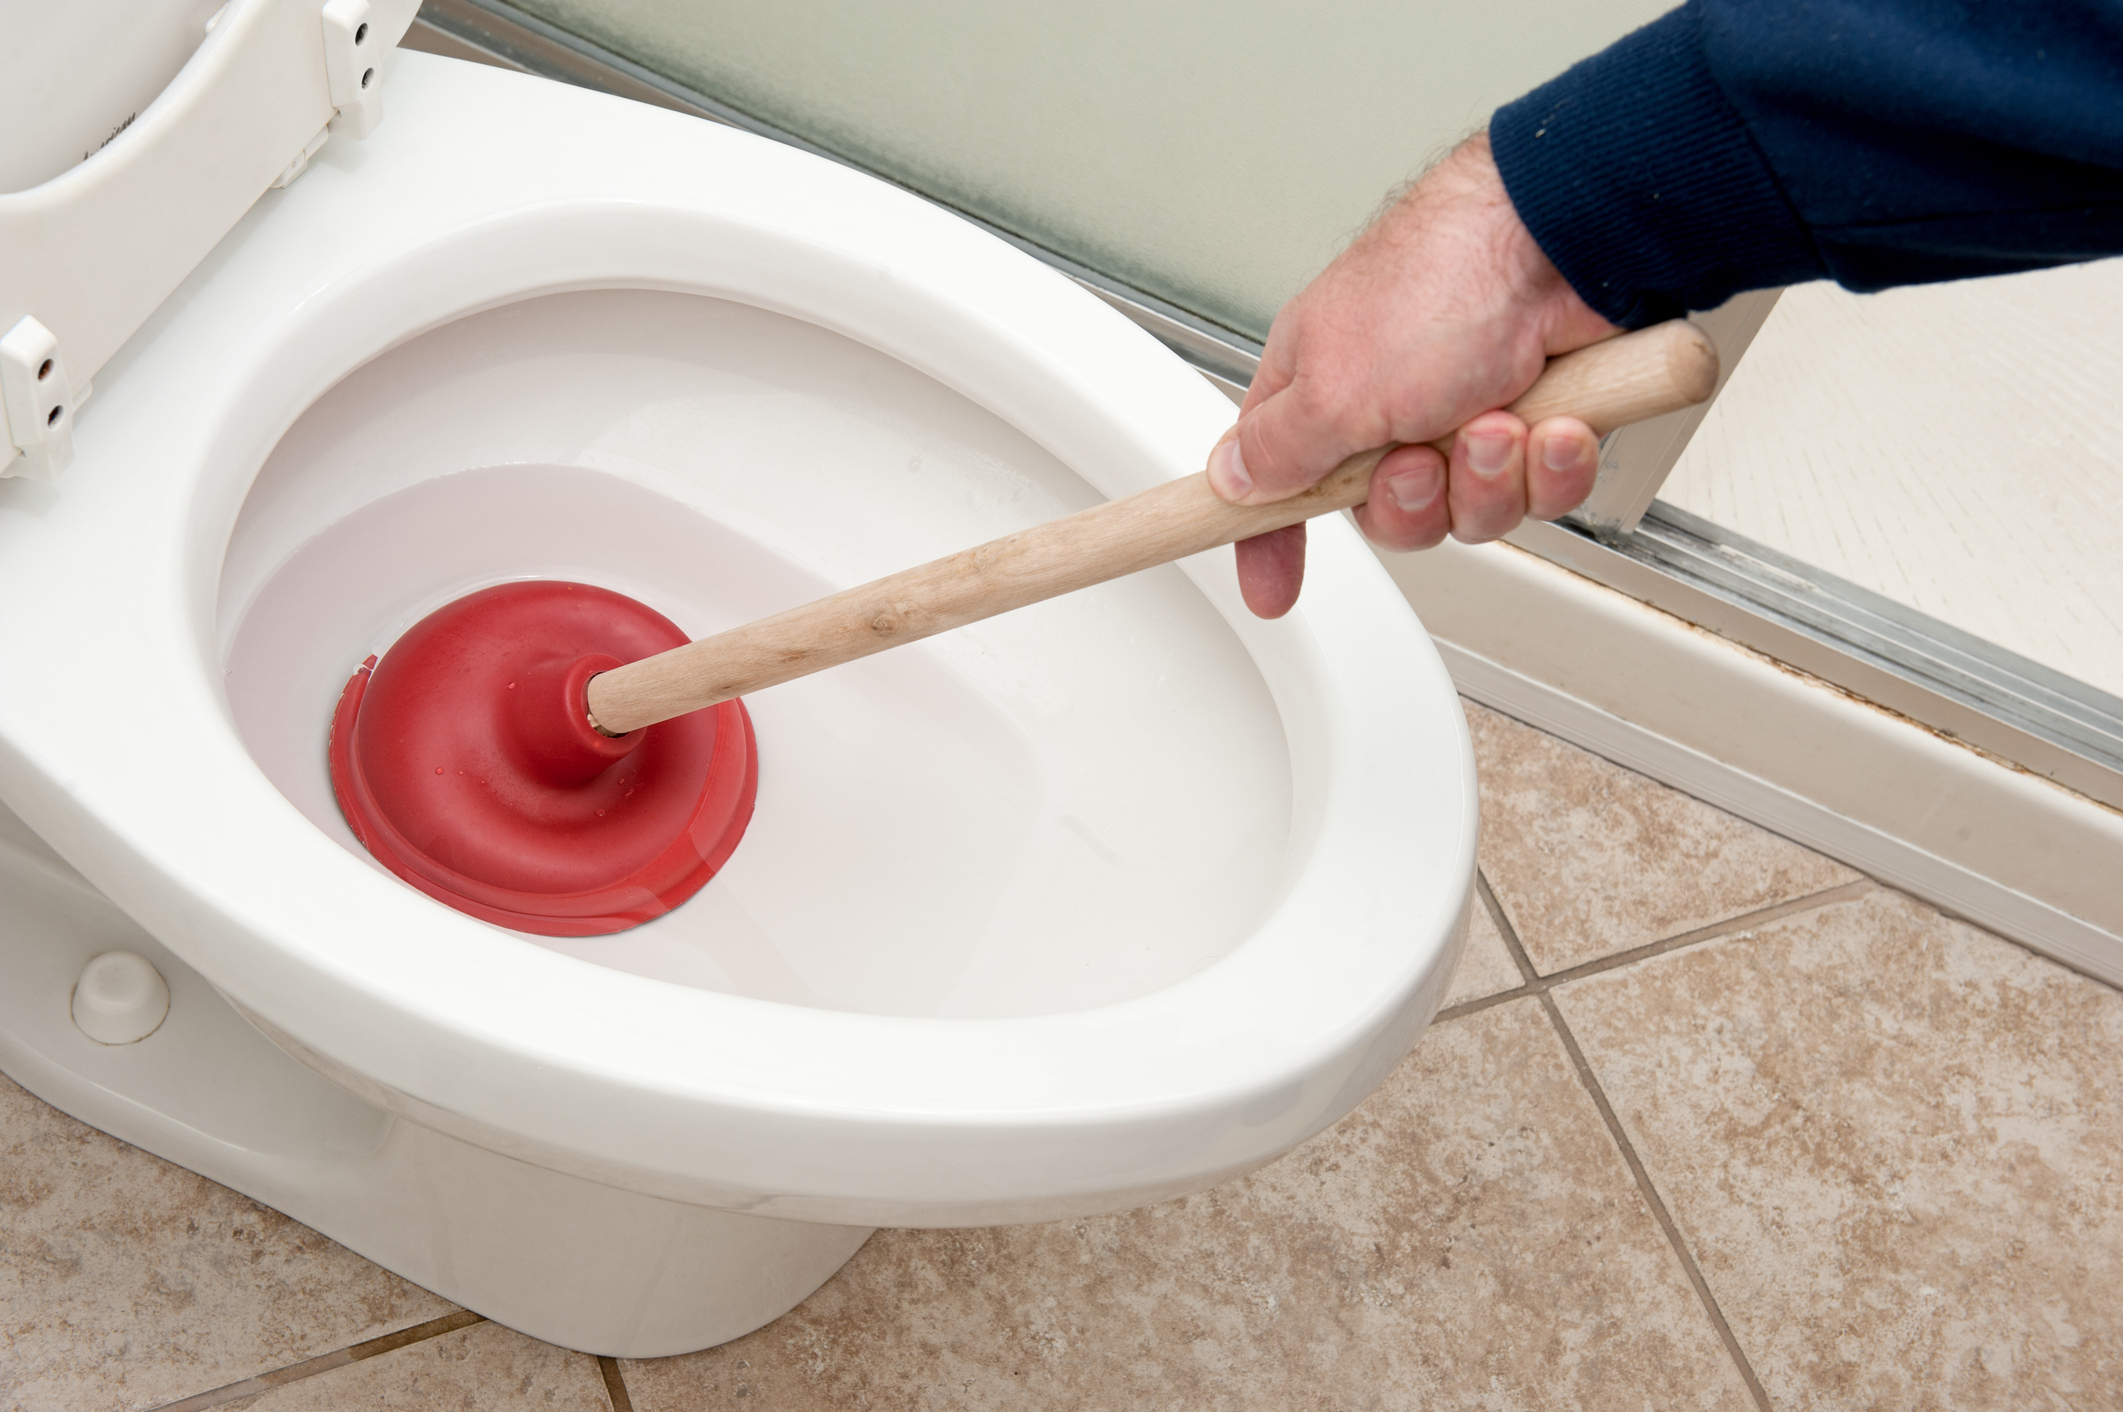 Plumber unclogging toiler using plunger